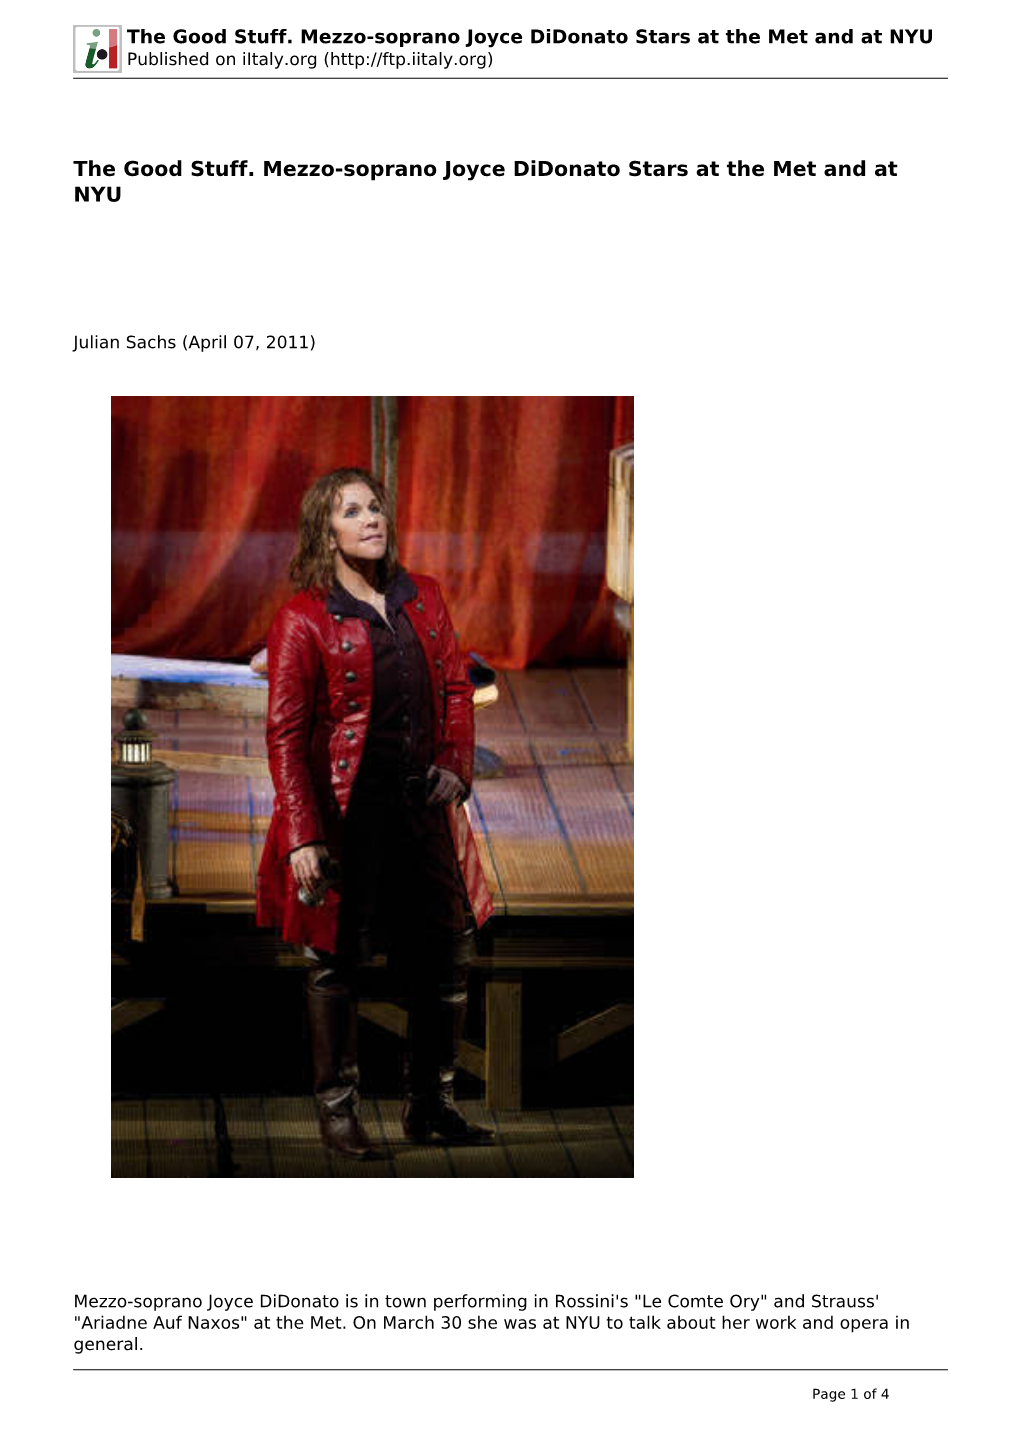 The Good Stuff. Mezzo-Soprano Joyce Didonato Stars at the Met and at NYU Published on Iitaly.Org (